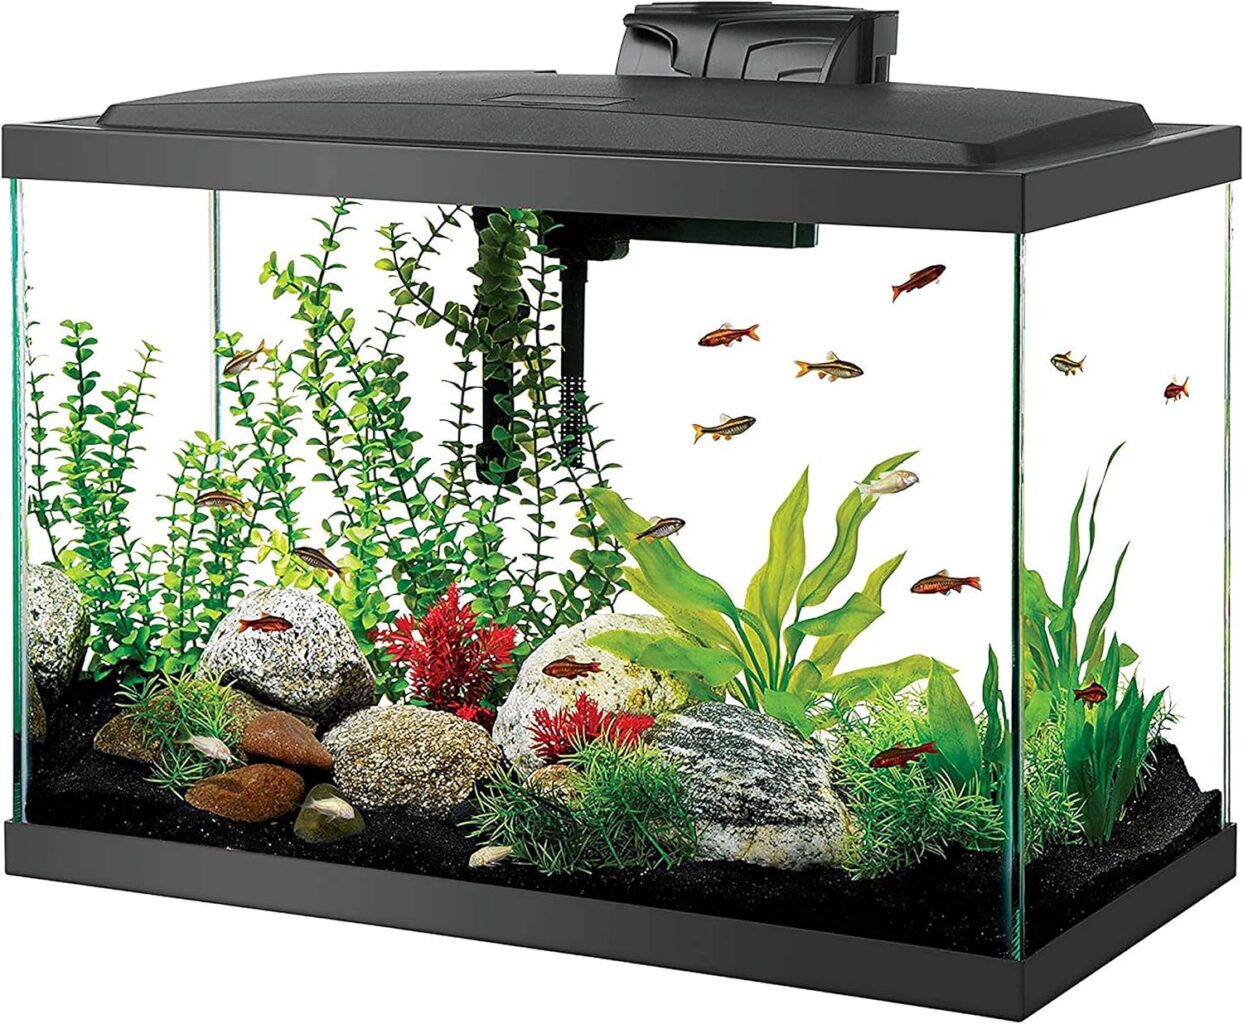 Aqueon Aquarium Fish Tank Starter Kit with LED Lighting 20 Gallon High Fish Tank